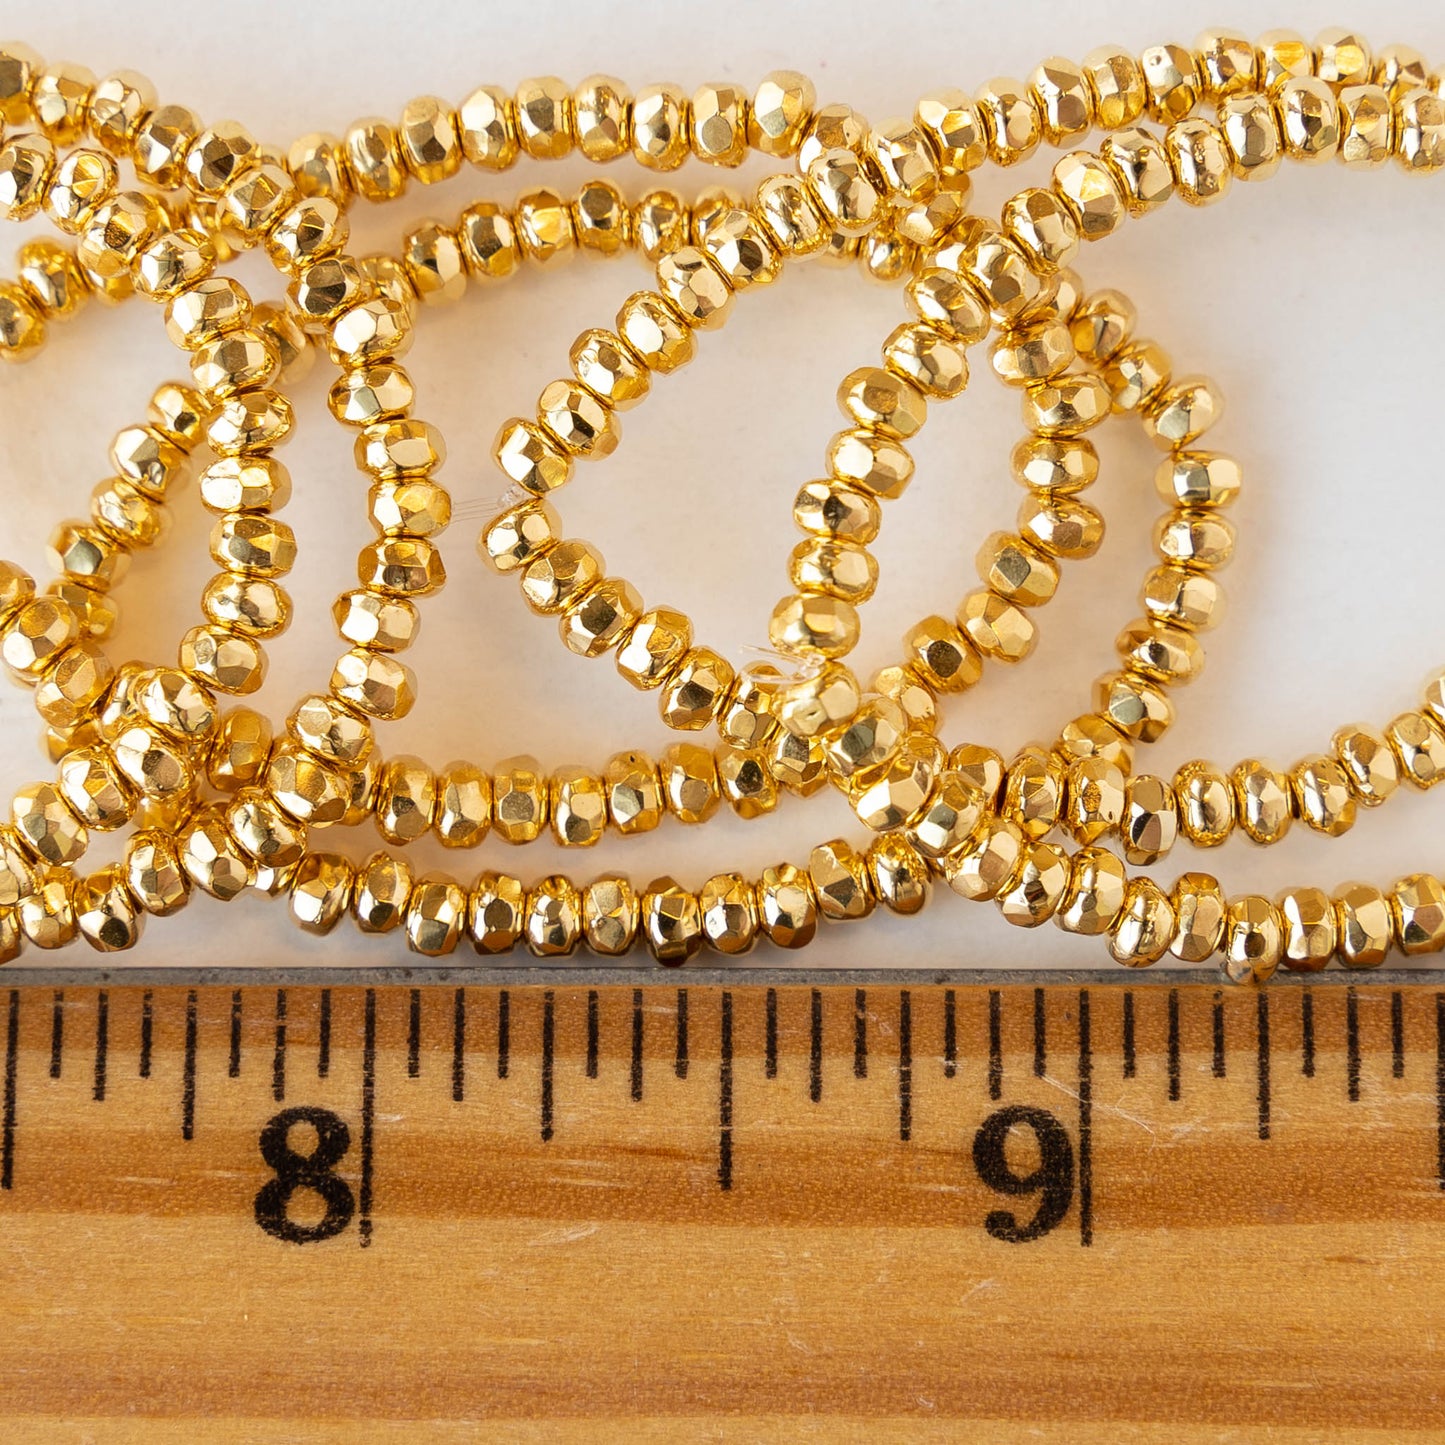 2x3mm Rondelle Beads - 24K Gold - 20 Beads